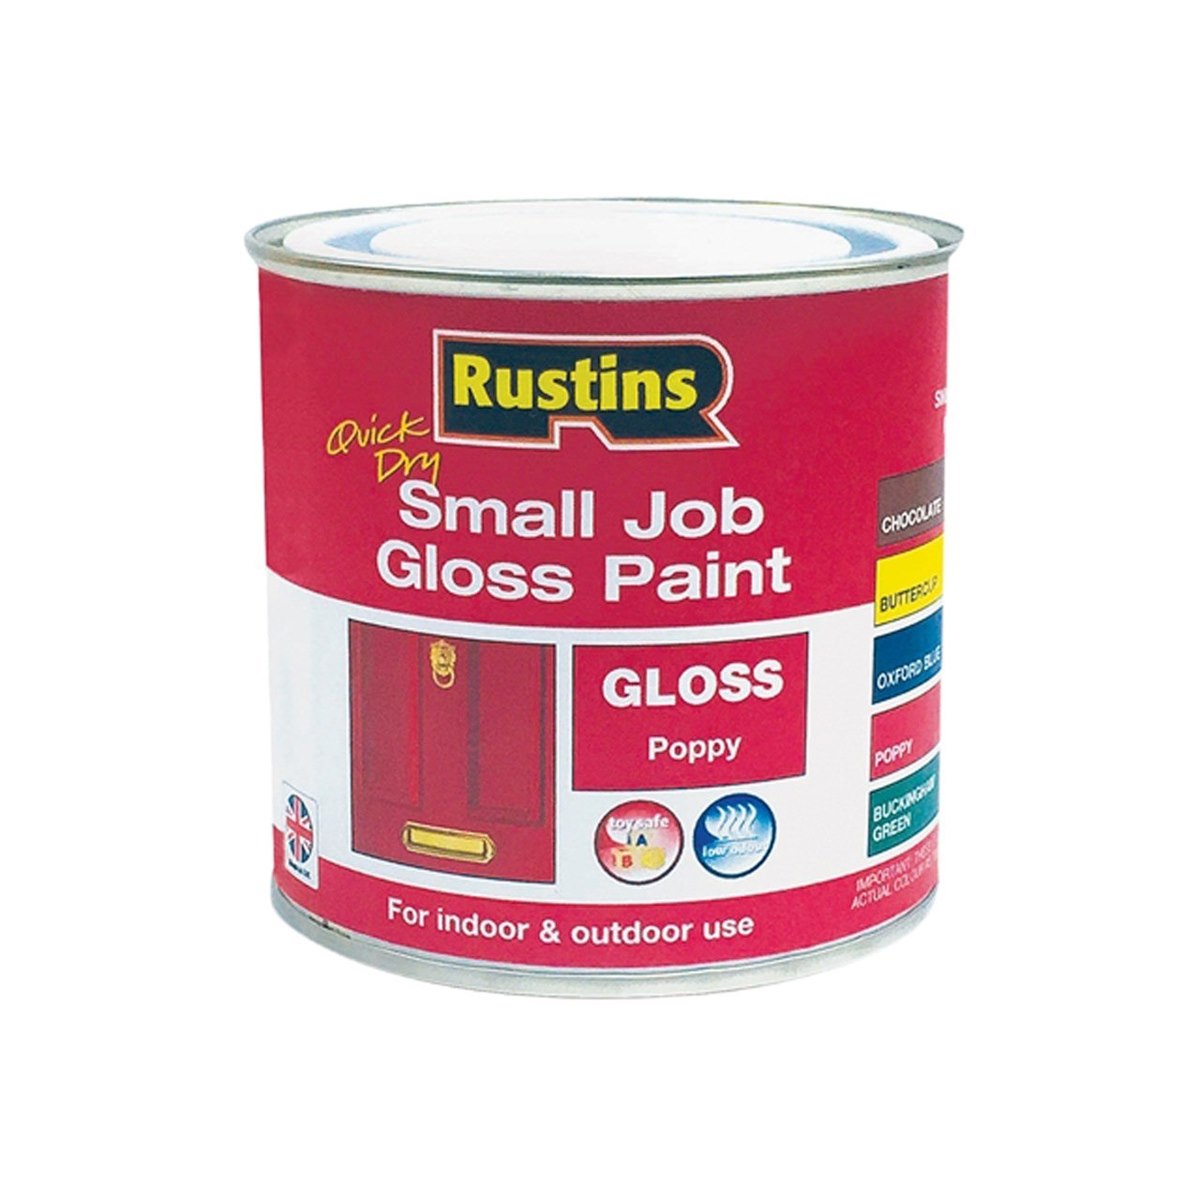 Rustins Quick Dry Small Job Gloss Paint Poppy Red 250ml